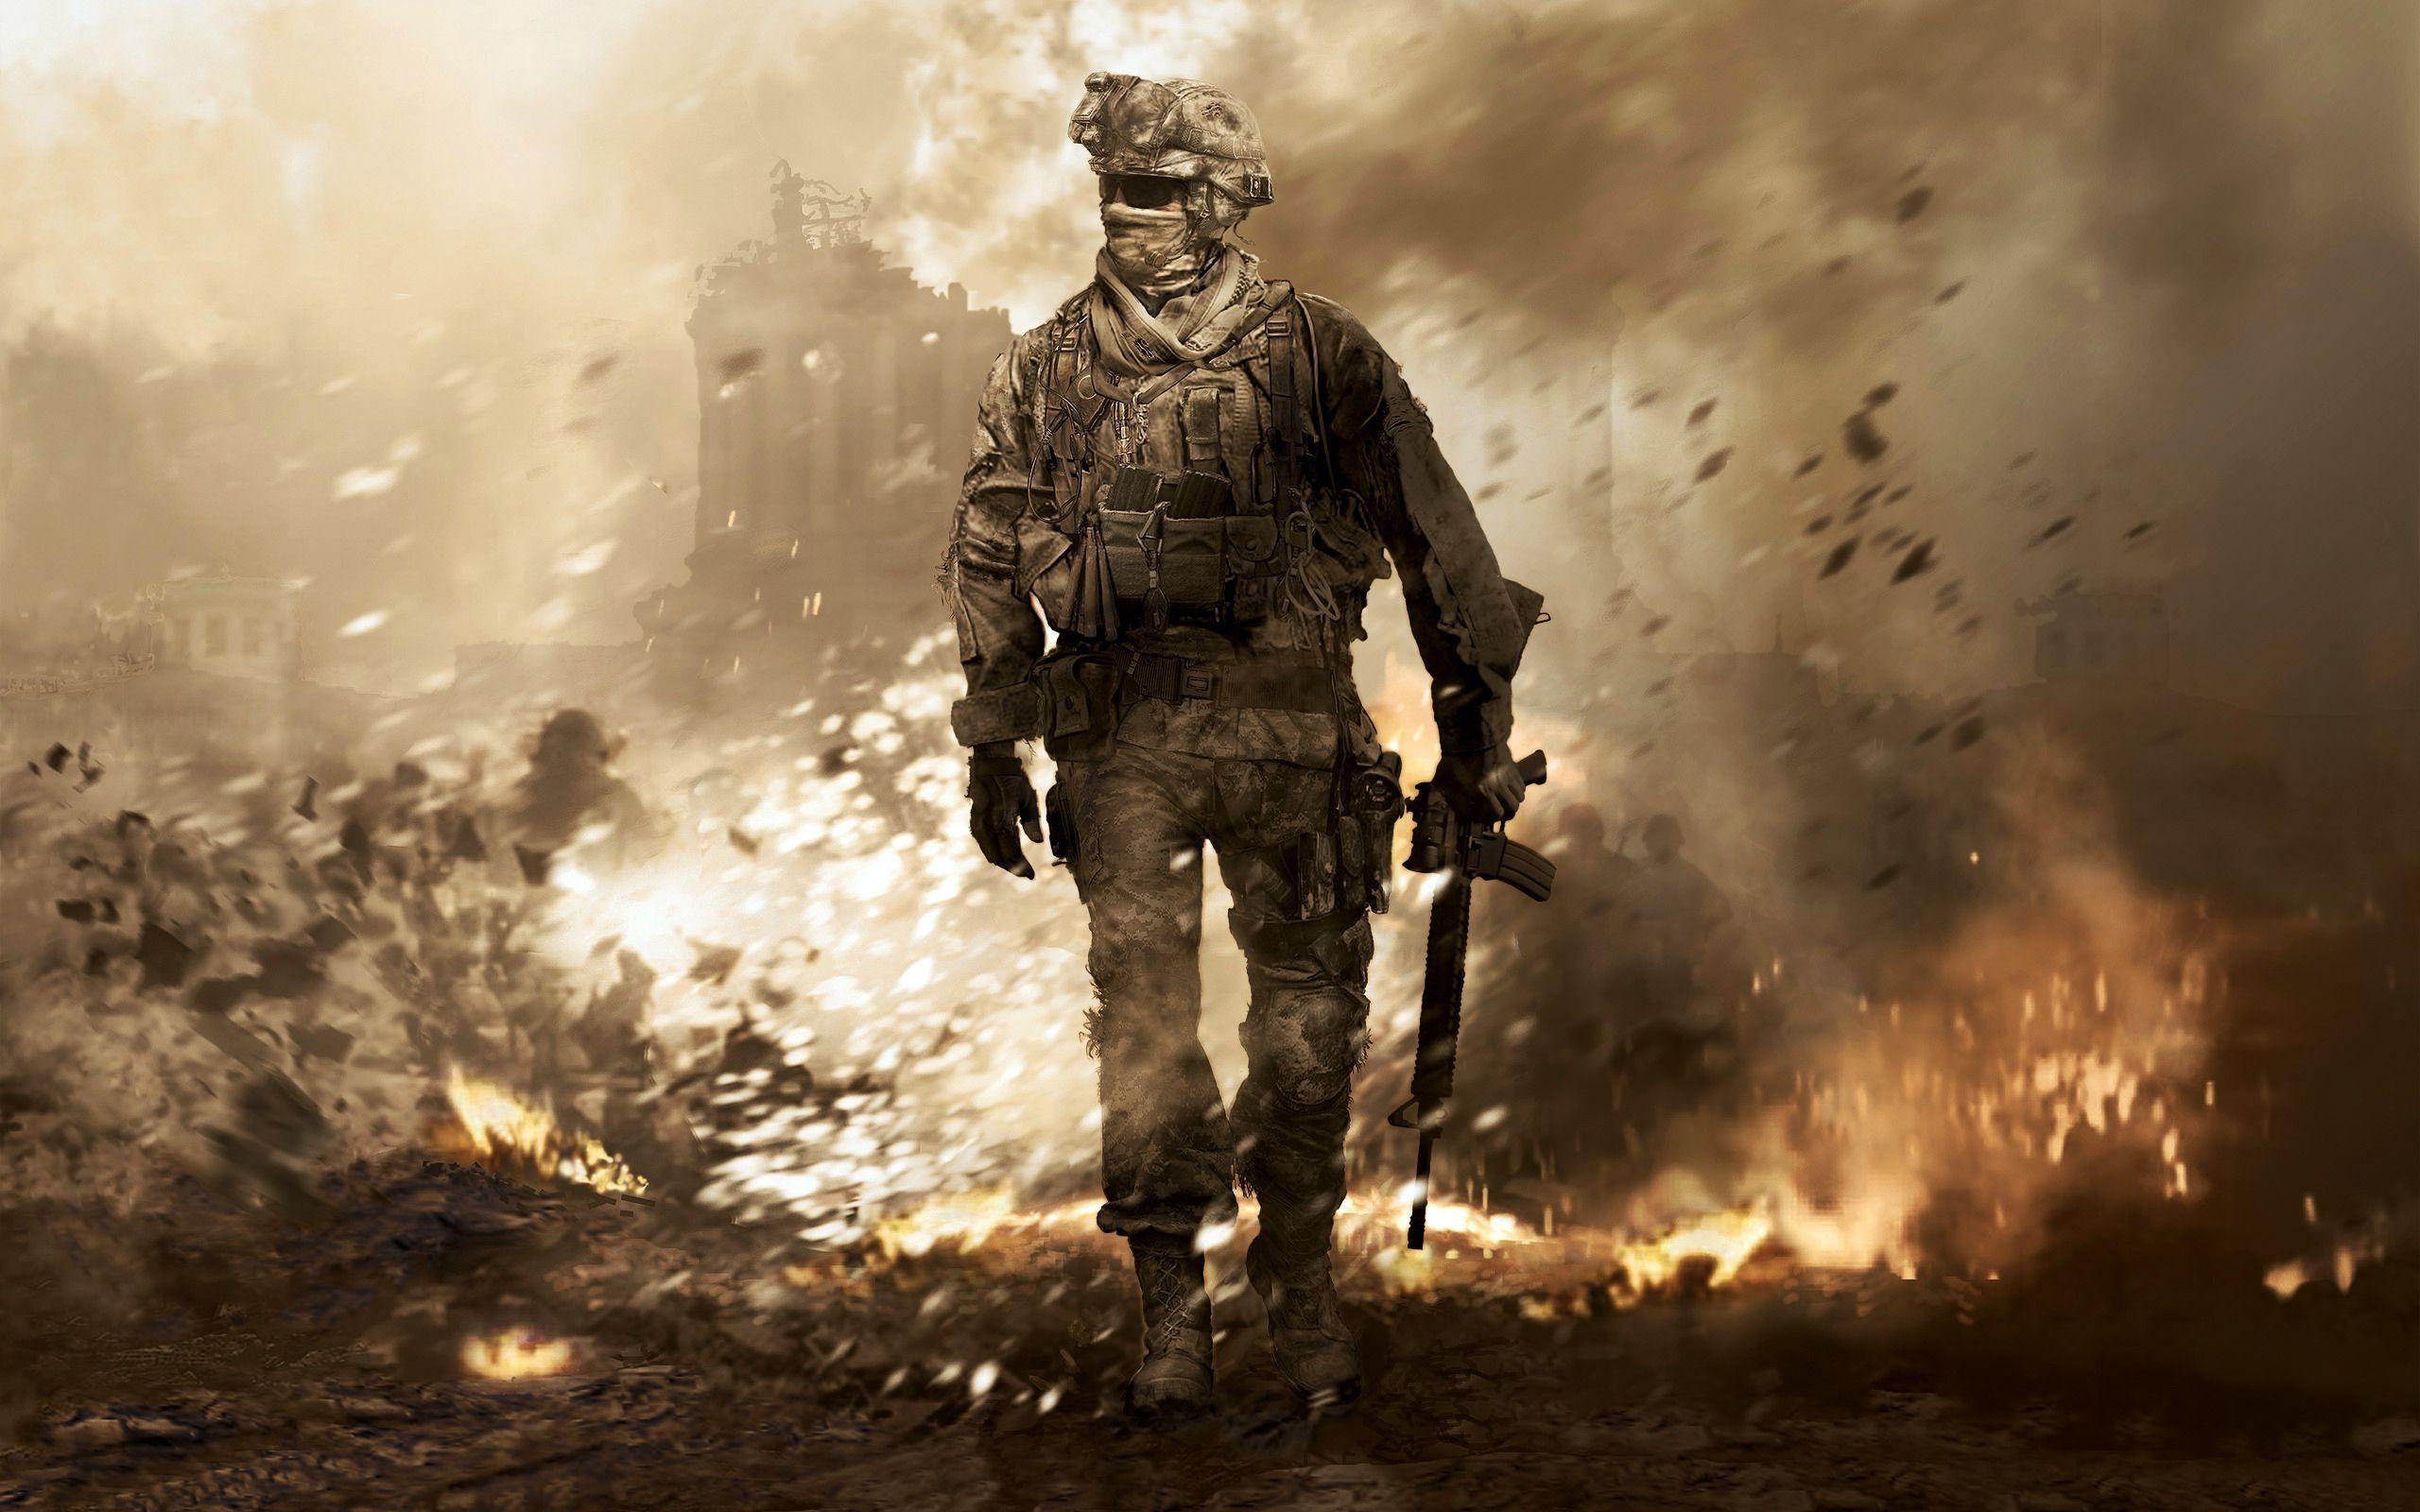 Call of Duty 4 Wallpaper